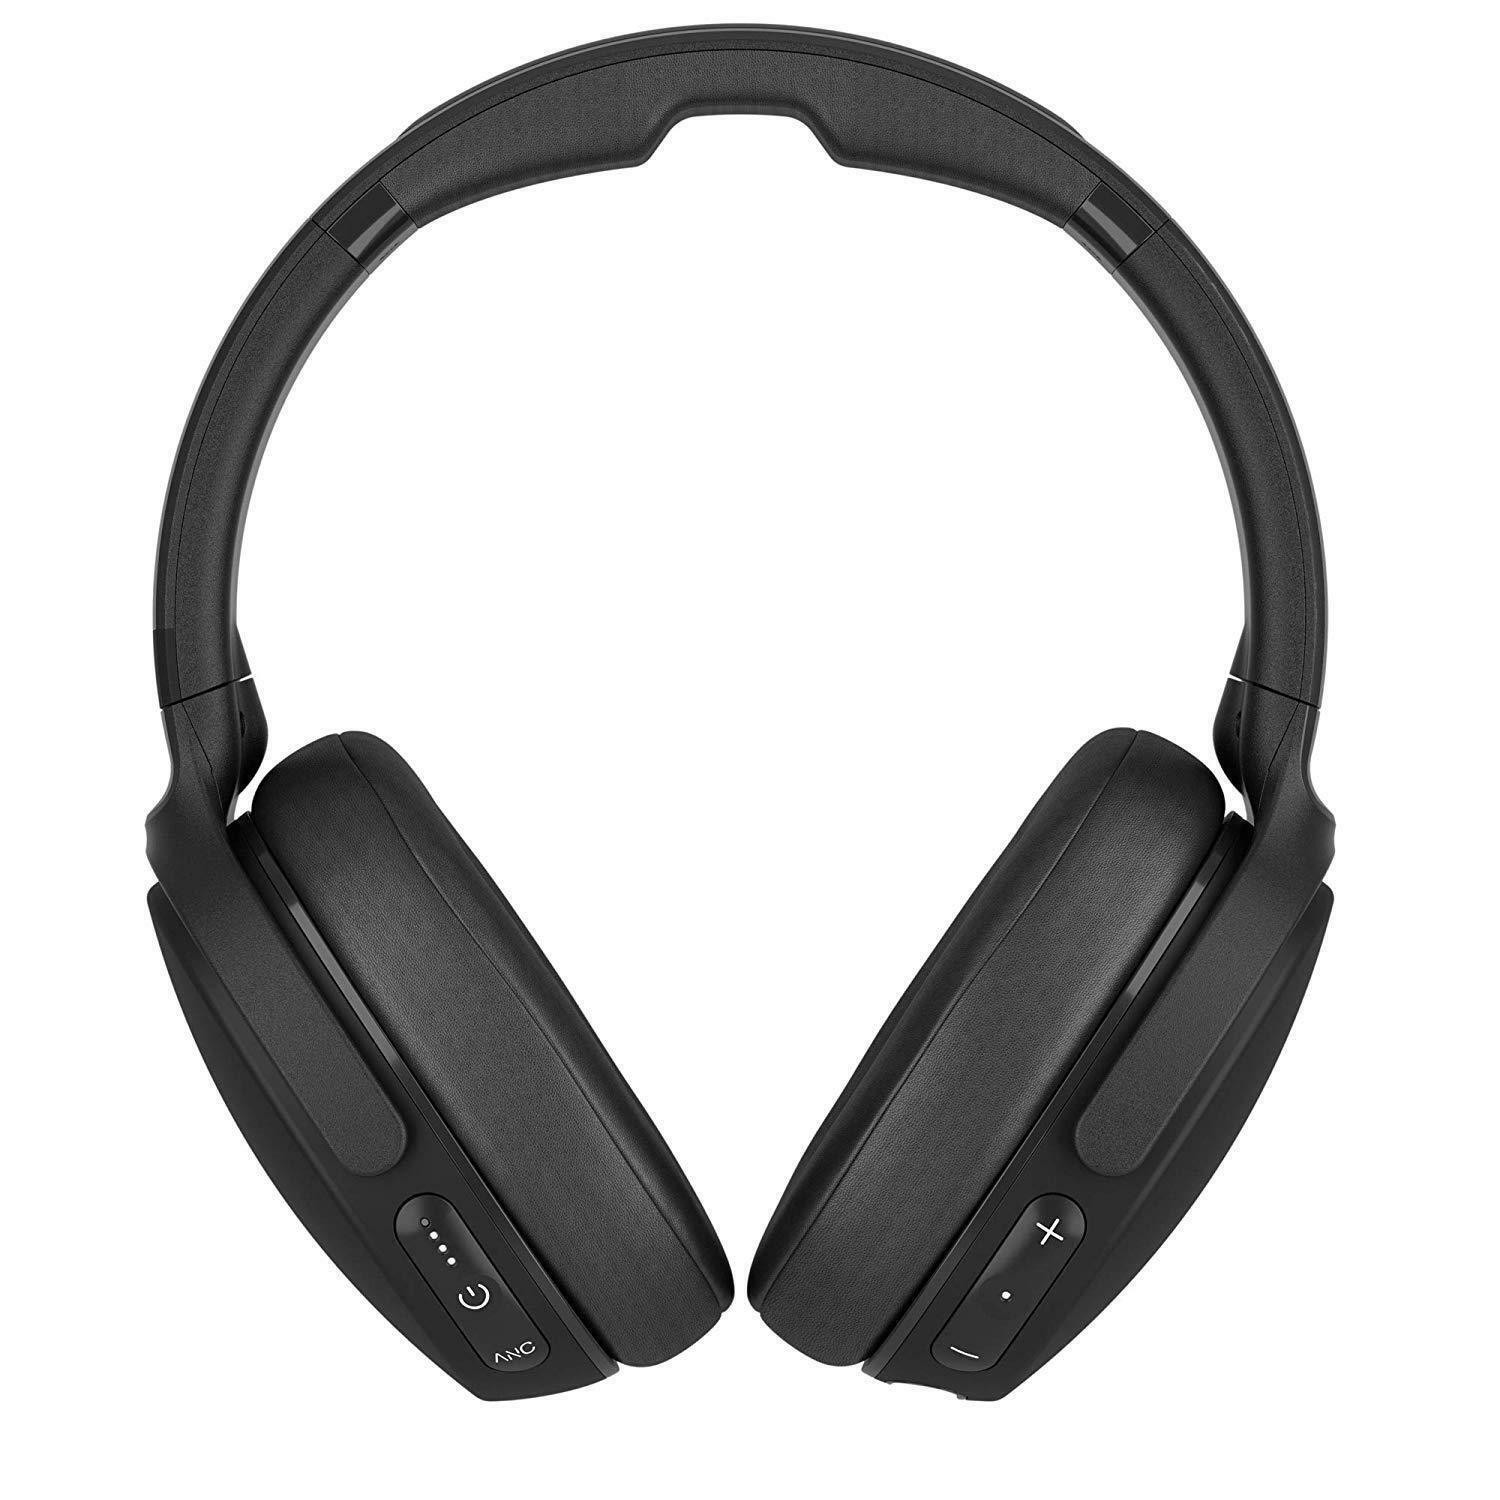 SkullCandy Venue ANC Wireless Over-Ear Headphones Black